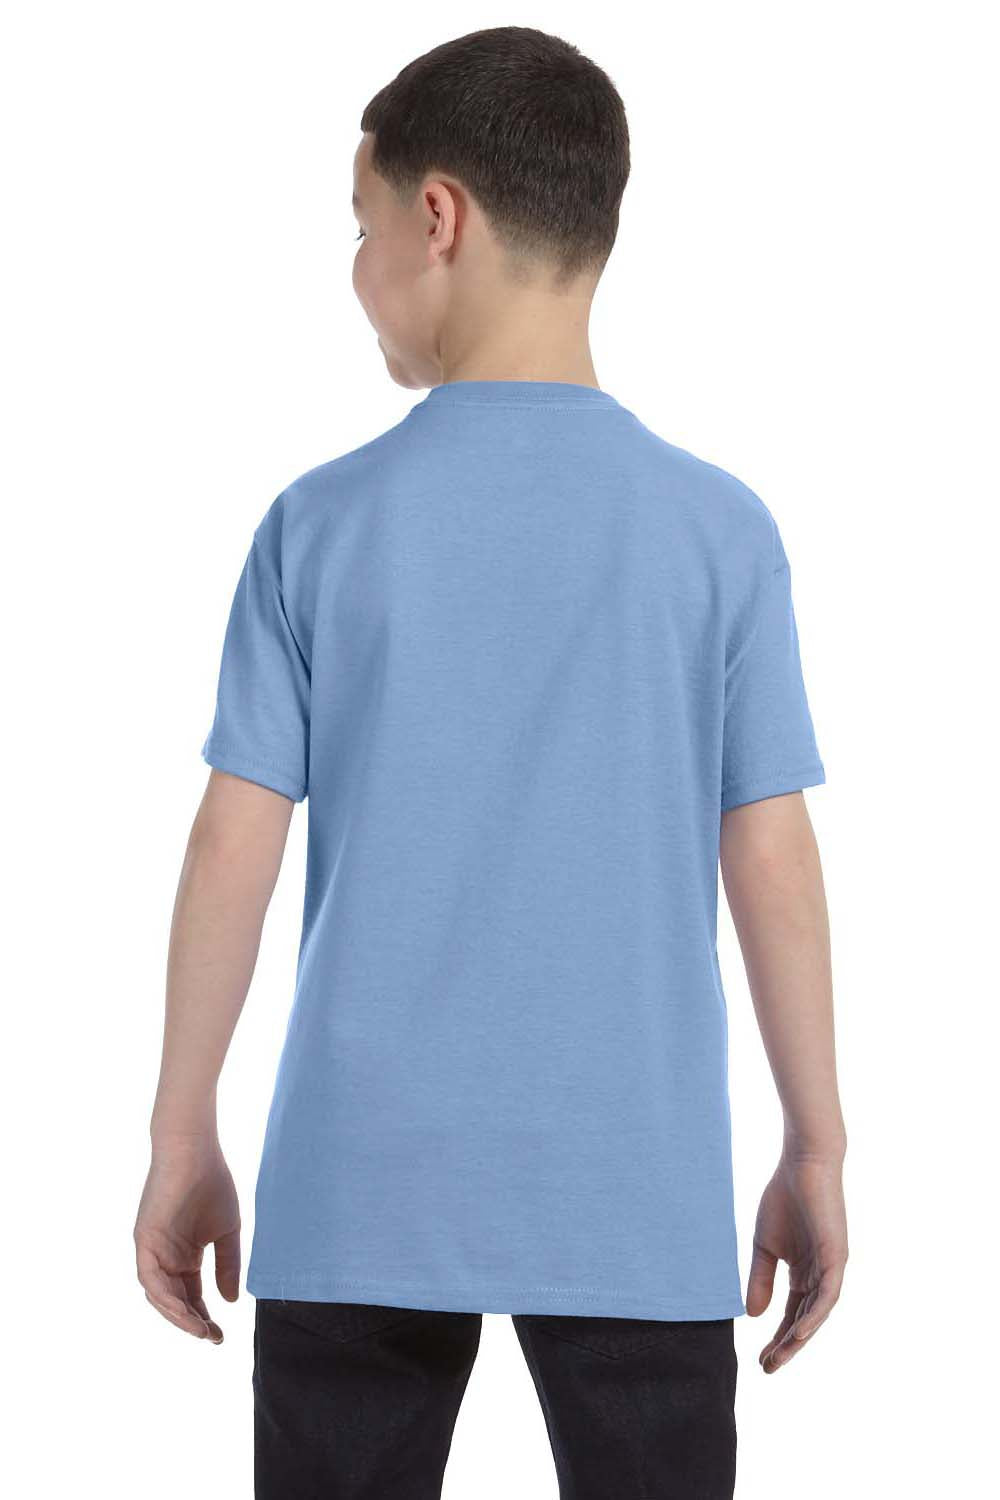 Jerzees 29B Youth Dri-Power Moisture Wicking Short Sleeve Crewneck T-Shirt Light Blue Back